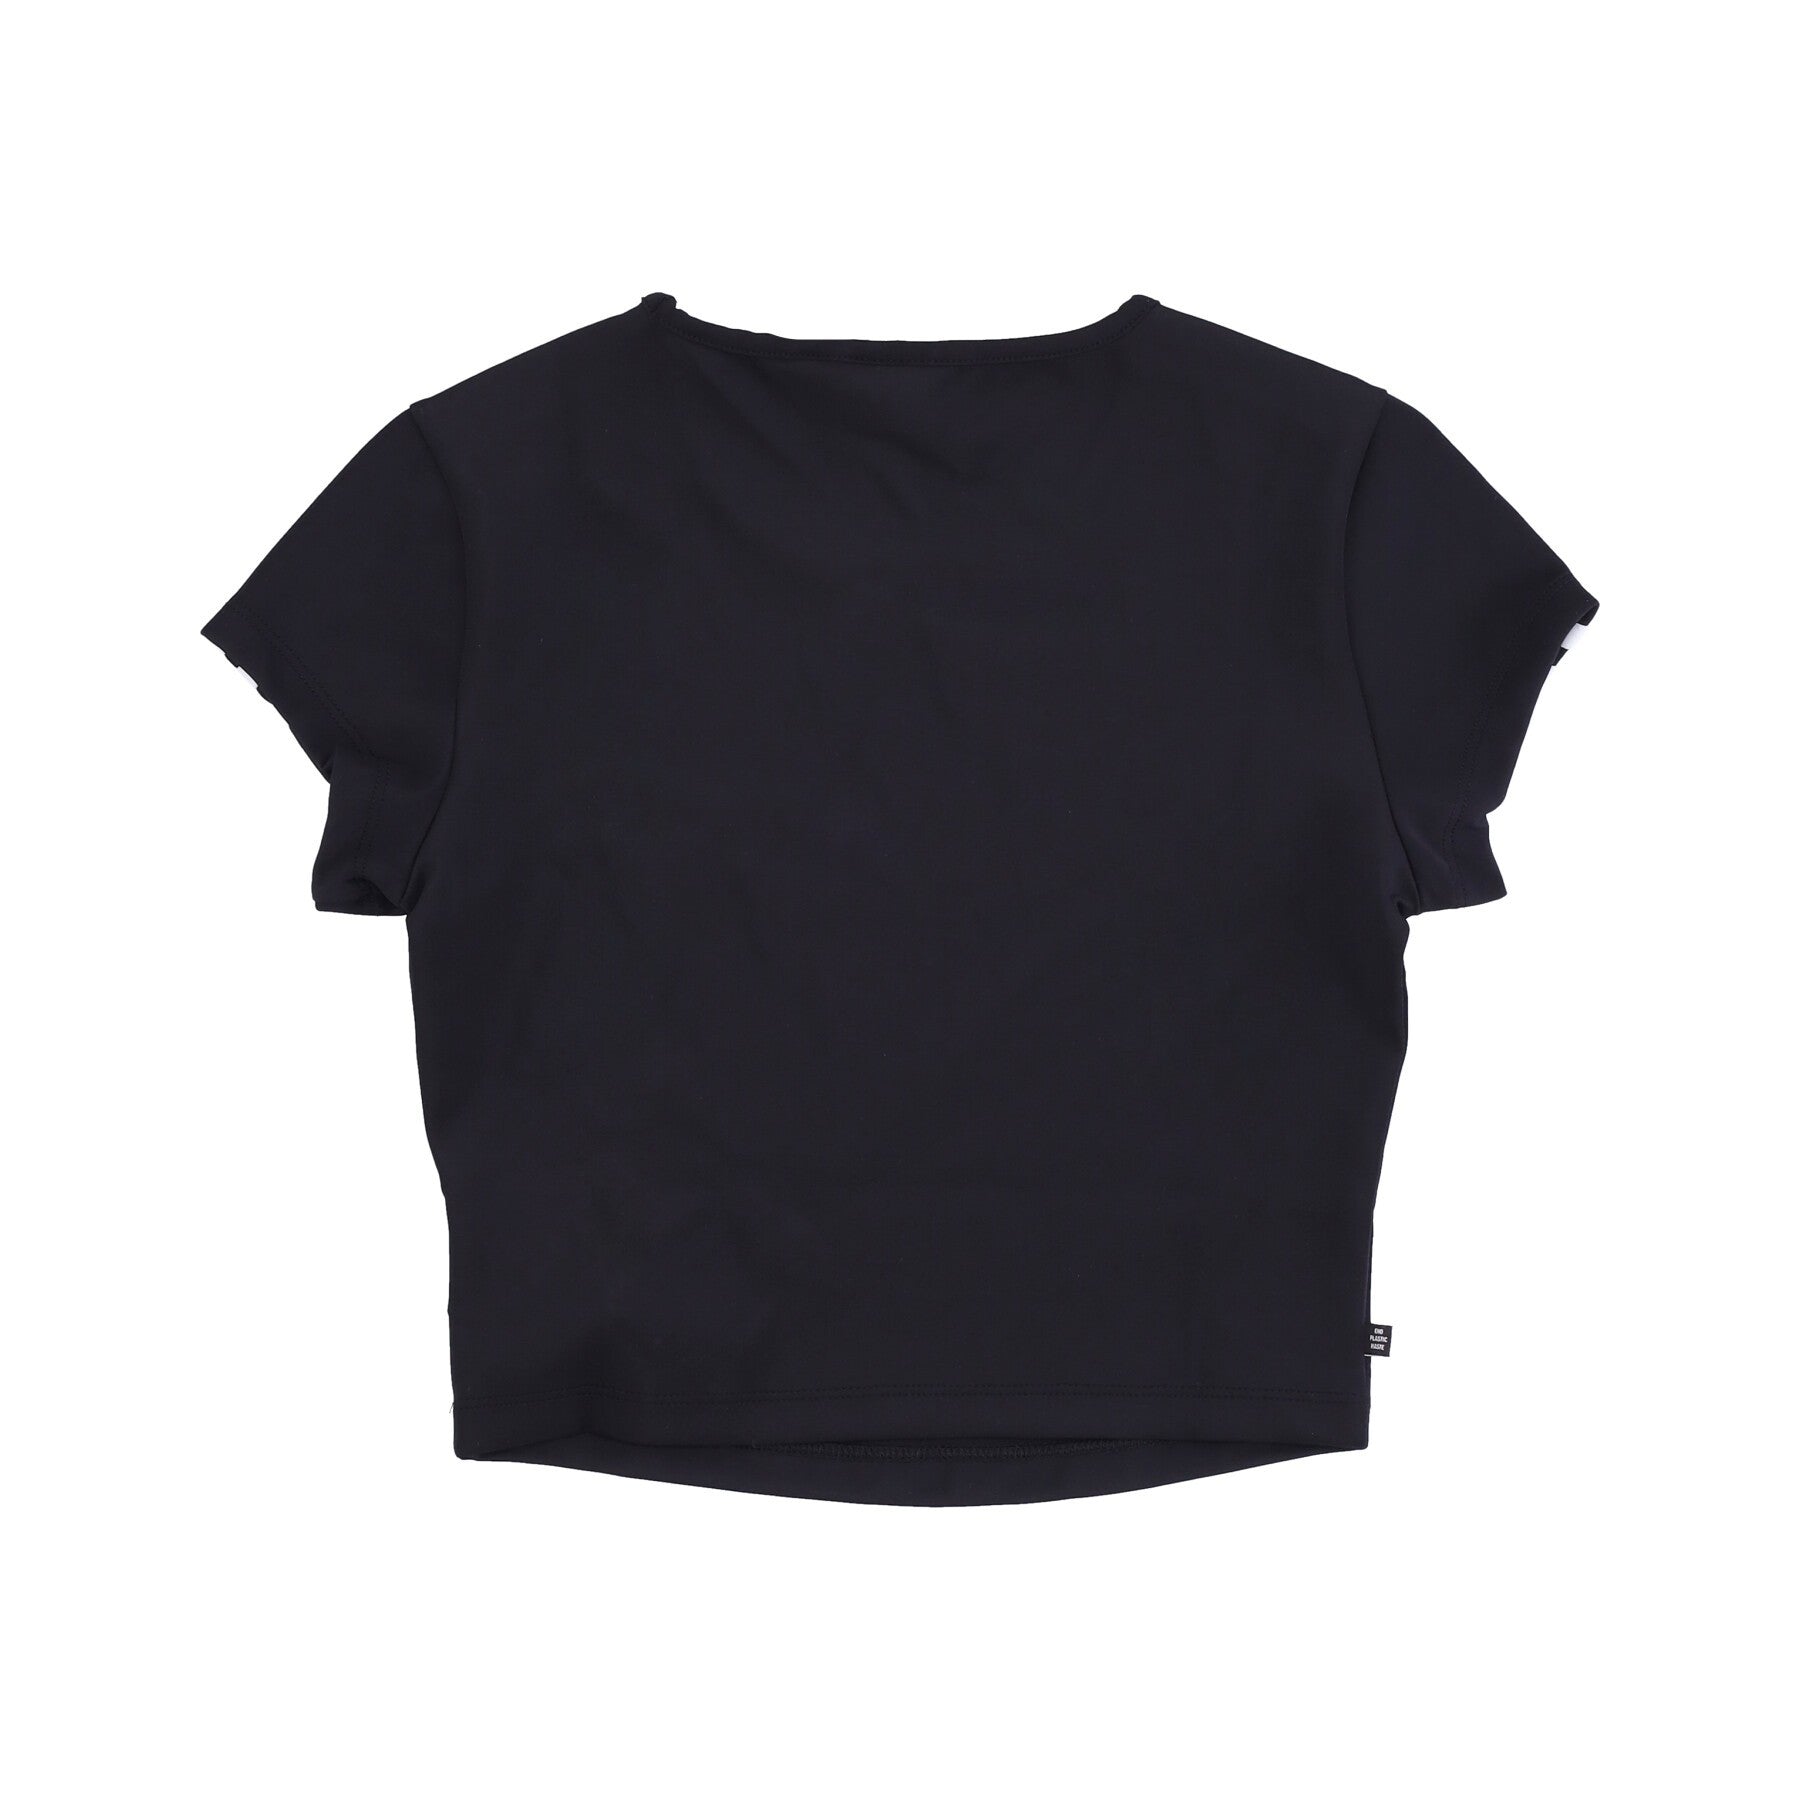 Cropped Women's T-Shirt Cropped Tee Black